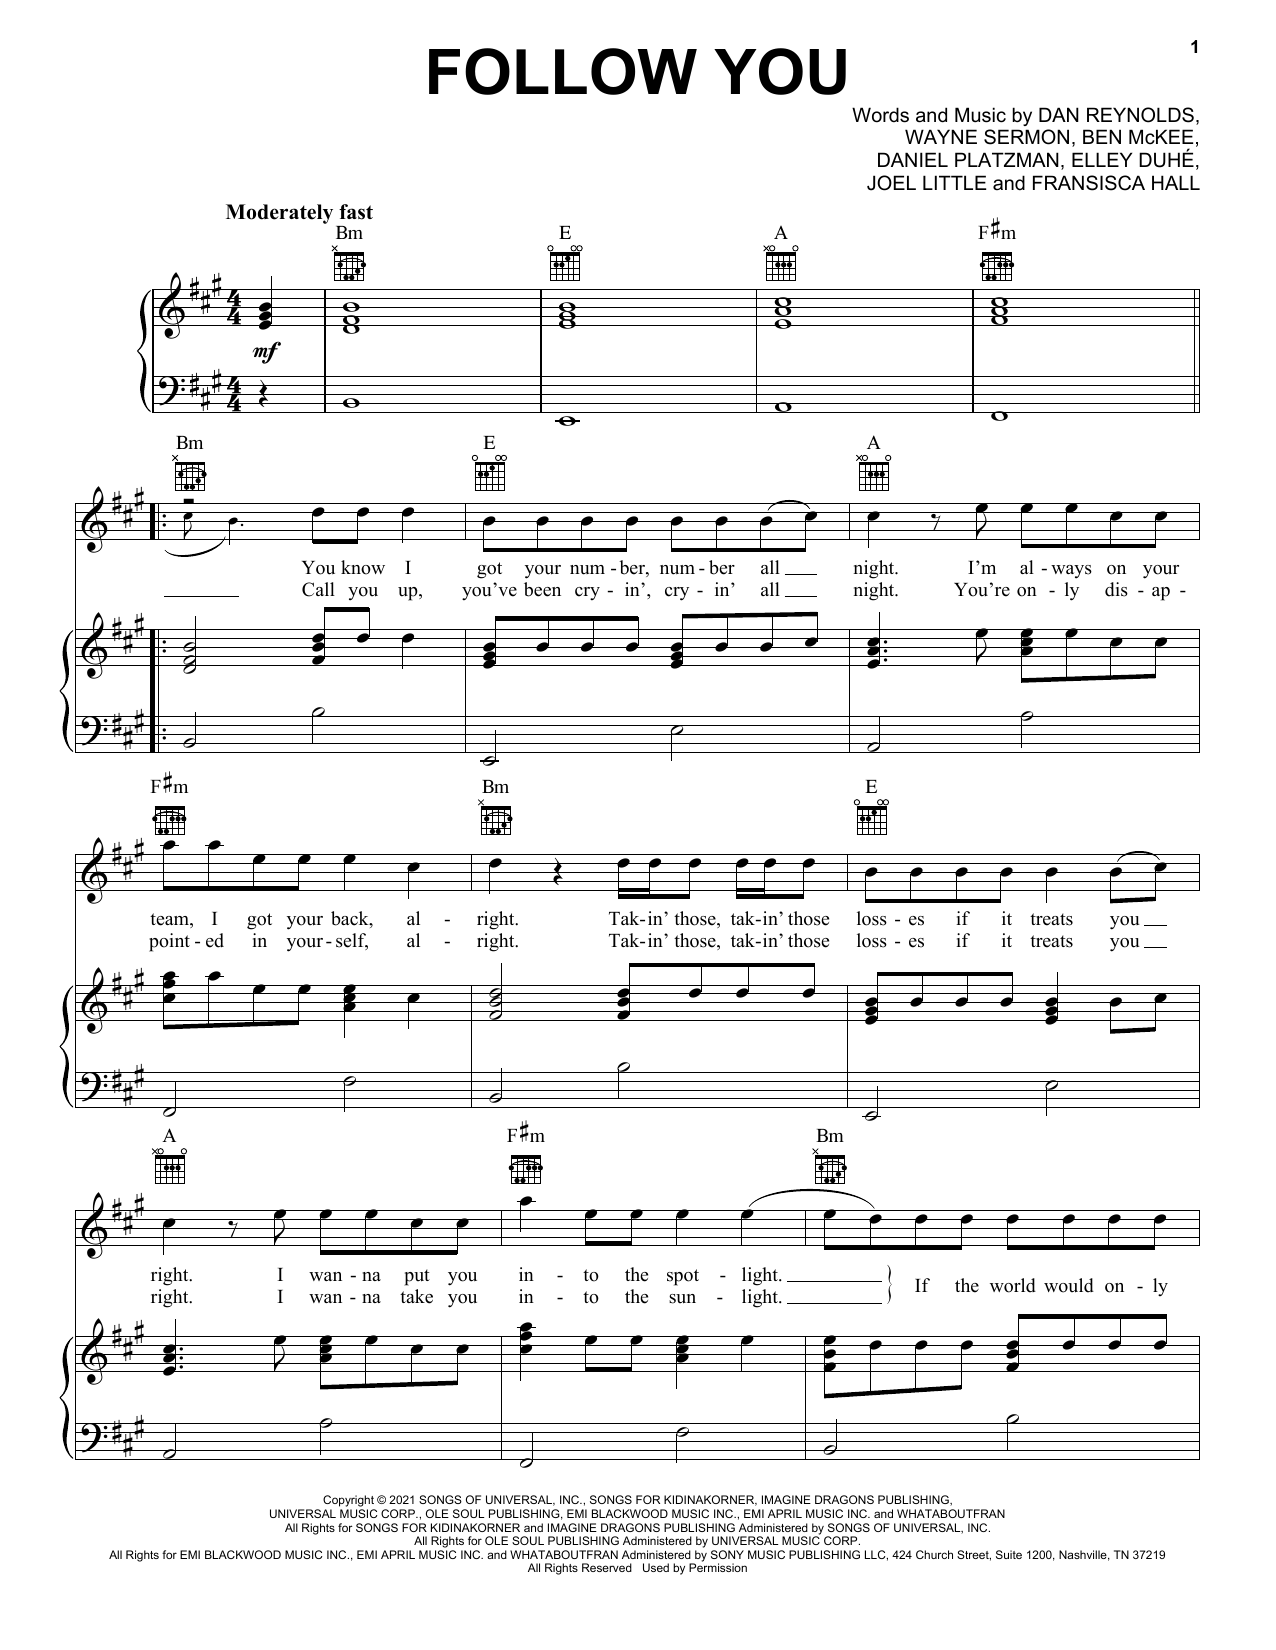 Imagine Dragons Follow You Sheet Music Notes & Chords for Ukulele - Download or Print PDF